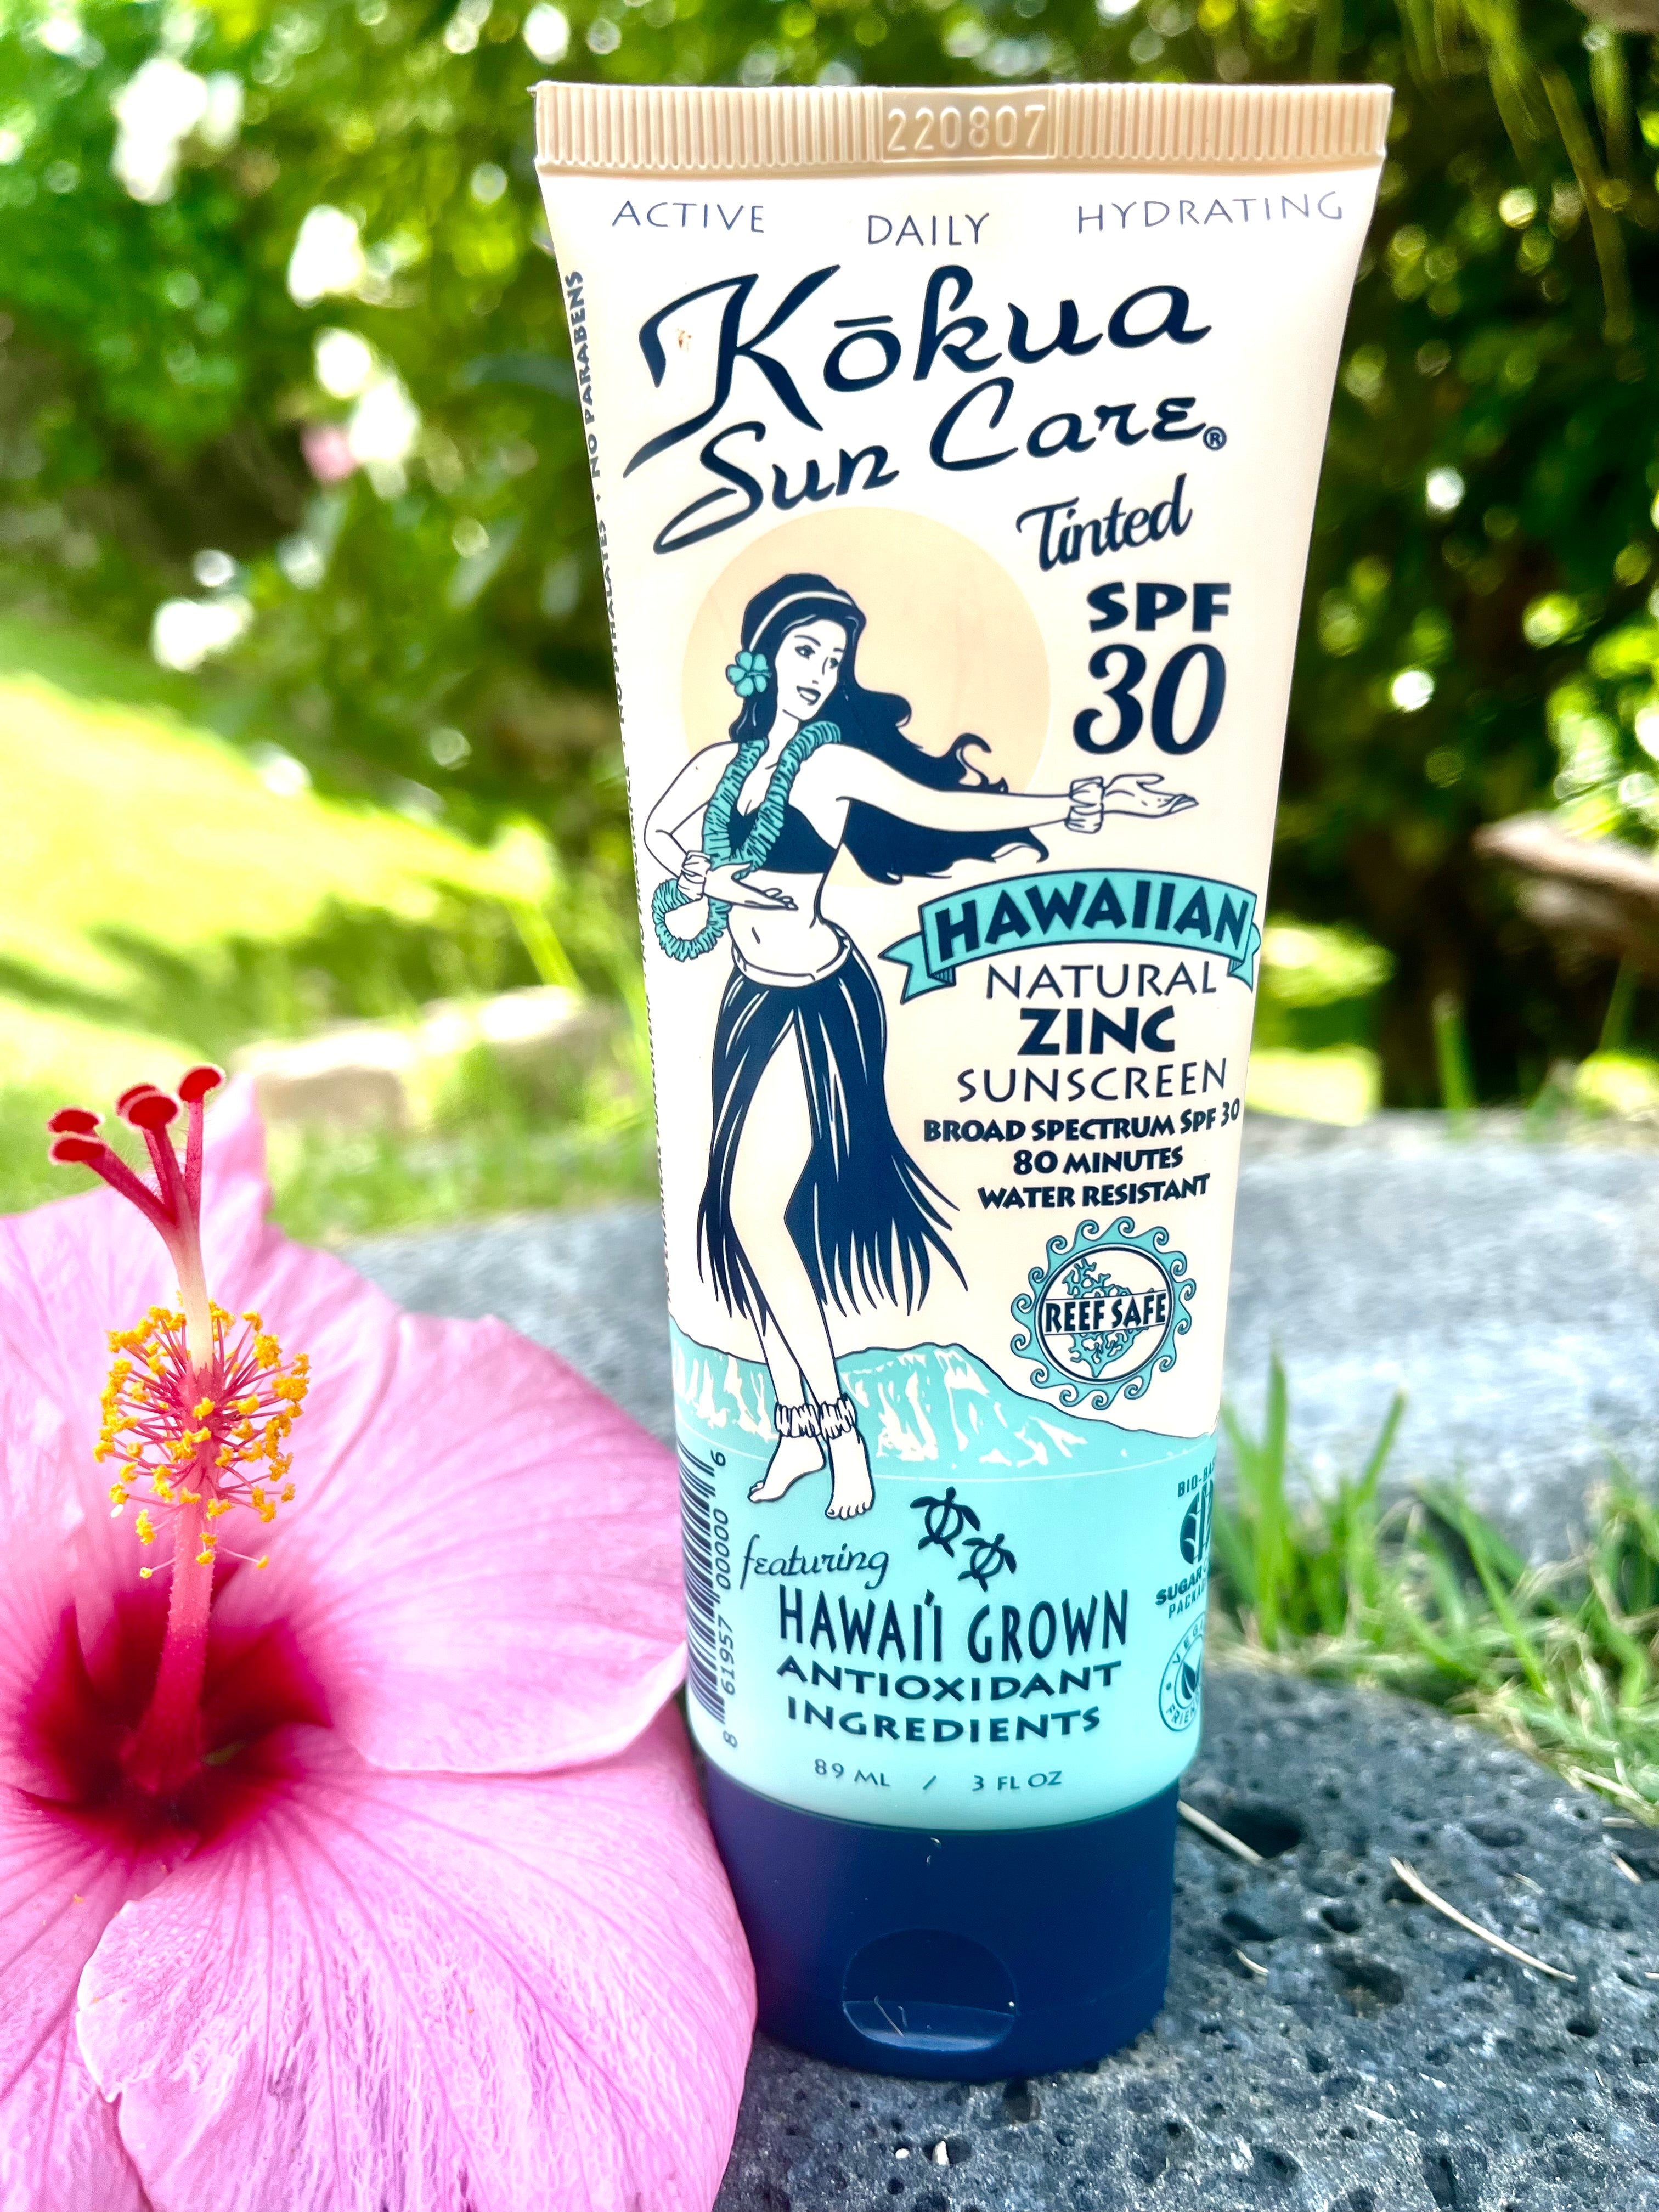 3oz SPF 30 Tinted Hawaiian Natural Zinc Sunscreen 80 Min Water Resistance Daily/Active/Moisturizing